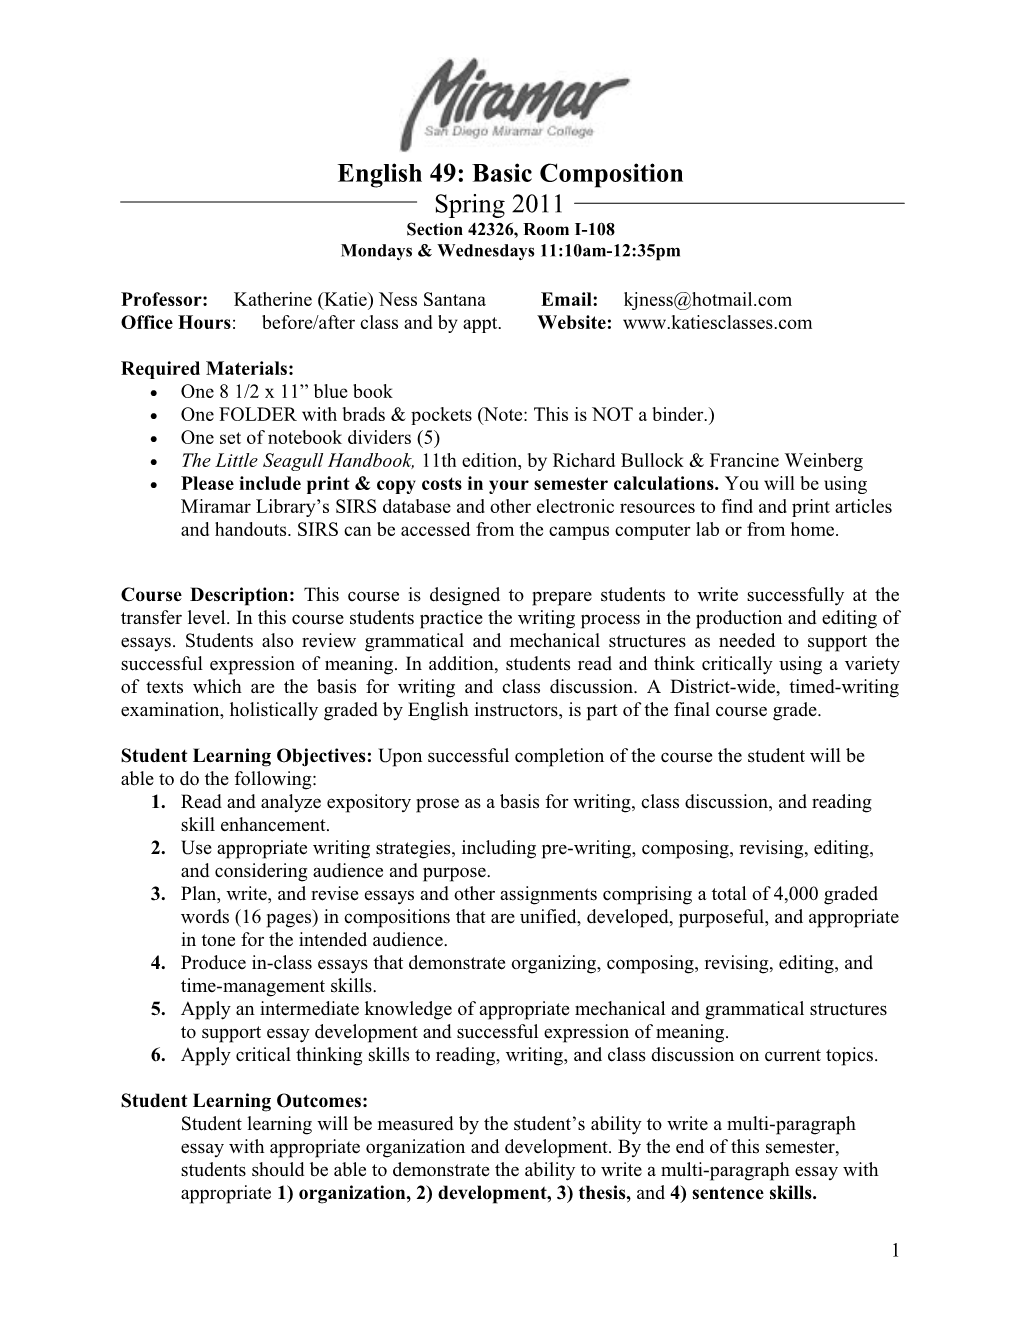 English 51: Basic Composition